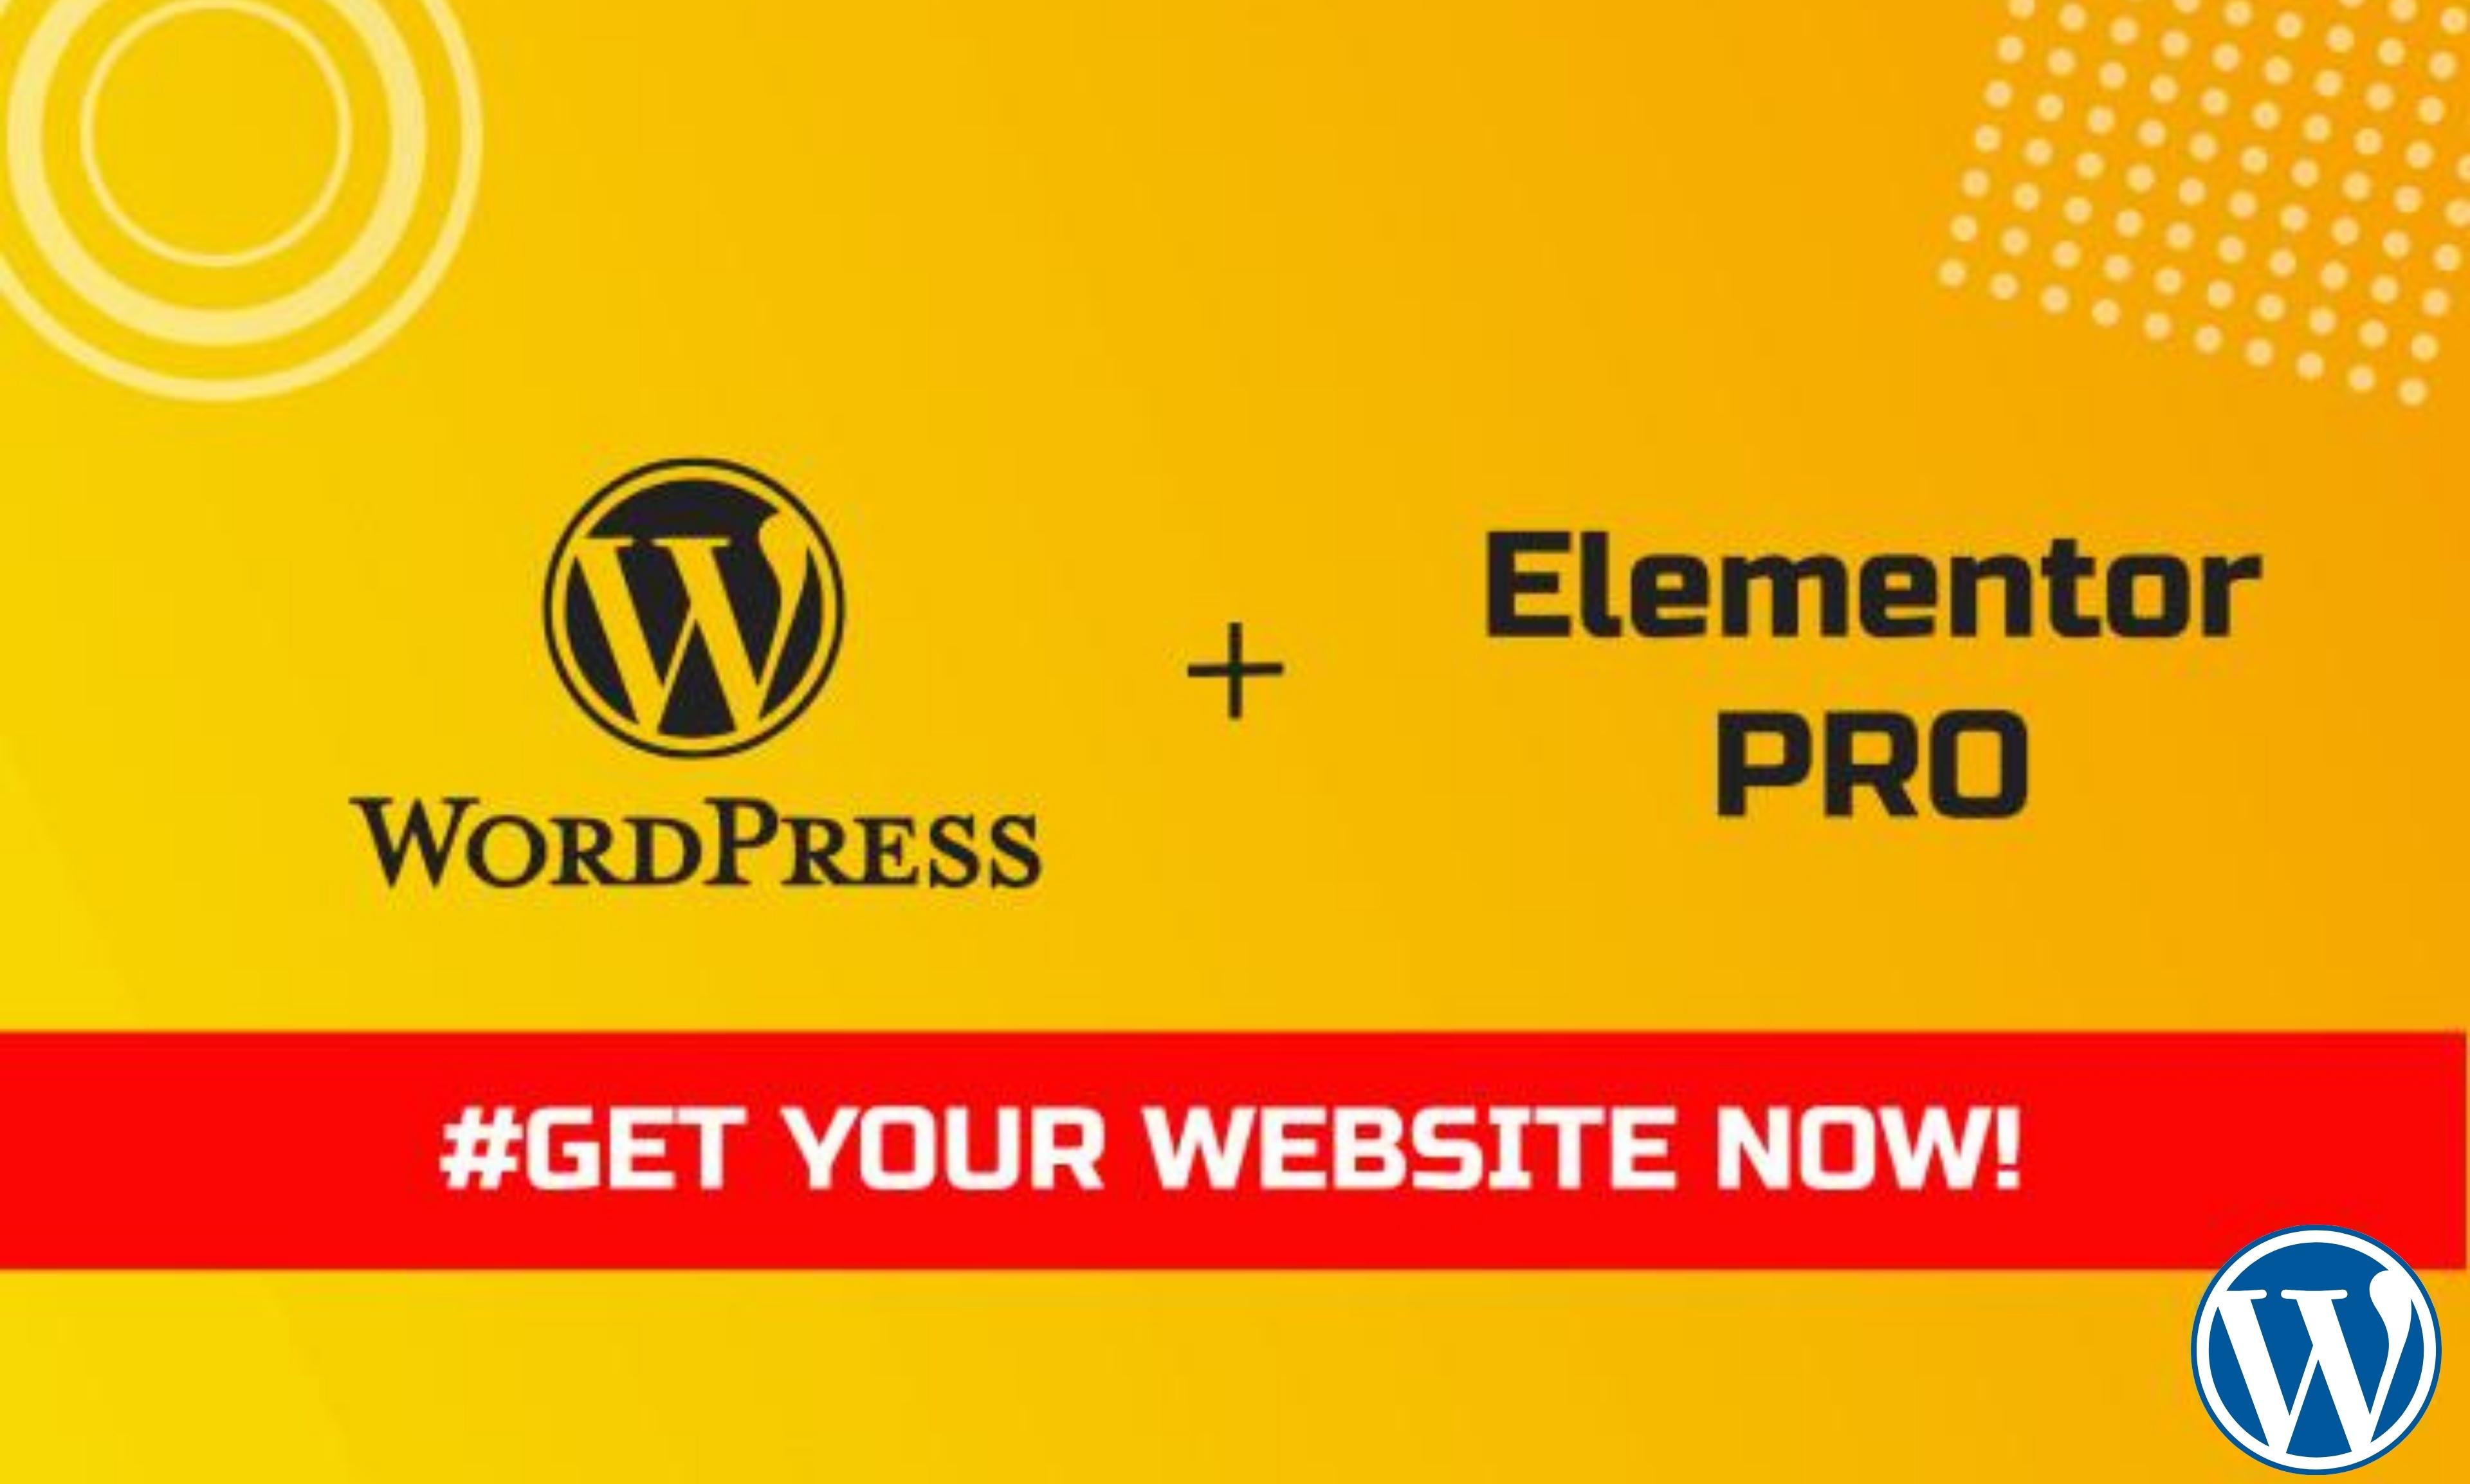 I will build responsive wordpress website using elementor pro page builder